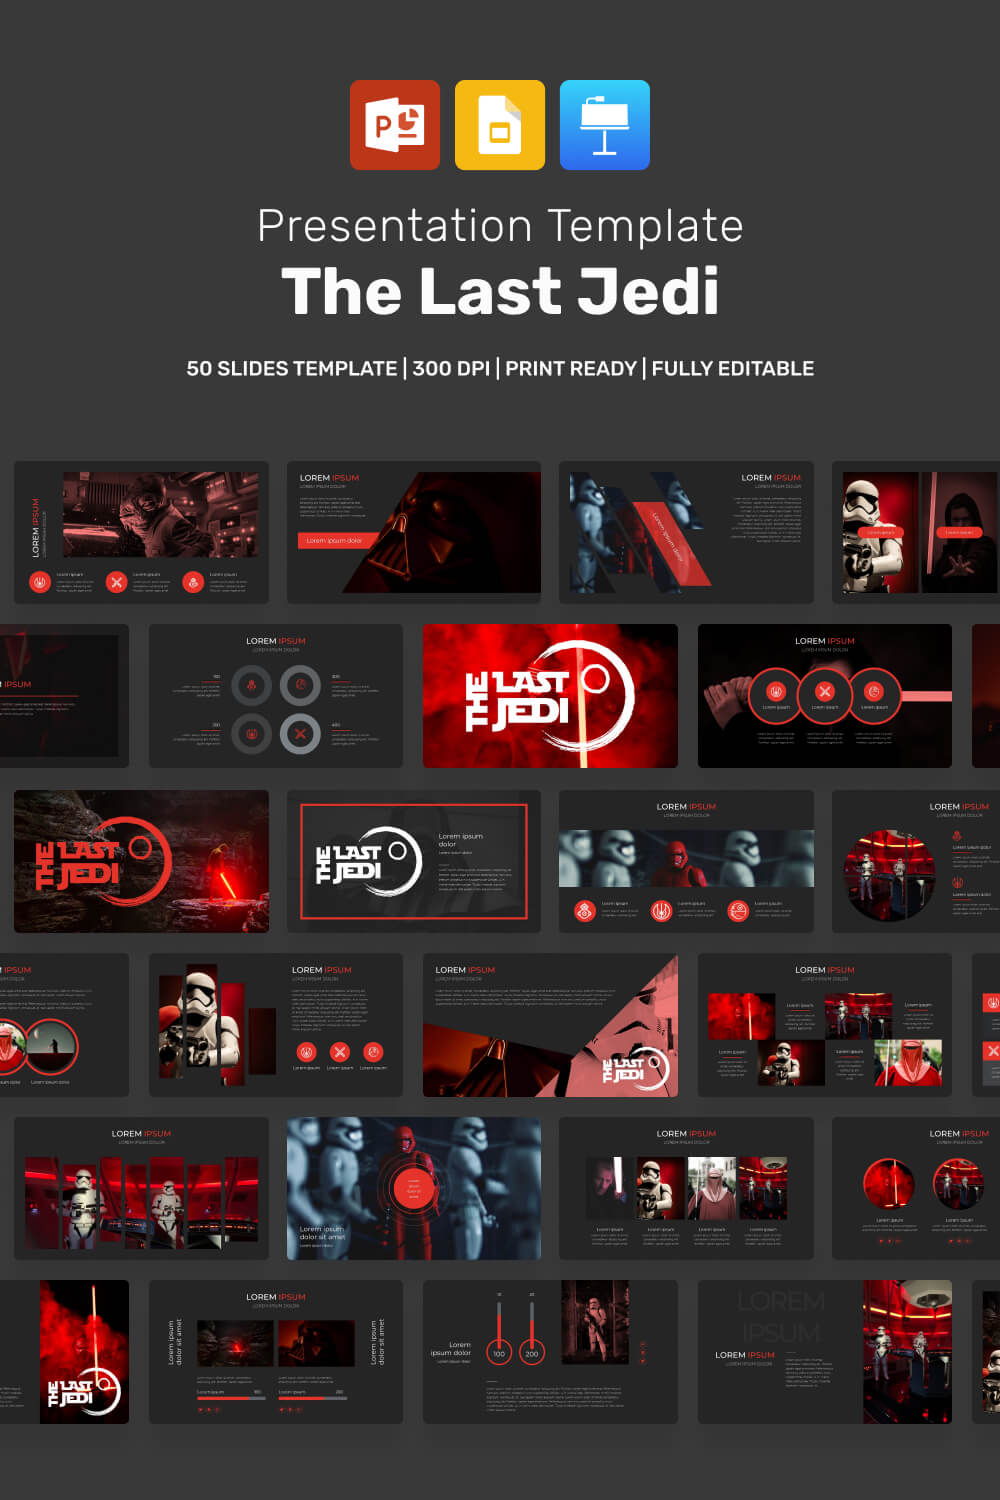 The Last Jedi Presentation Template pinterst image.